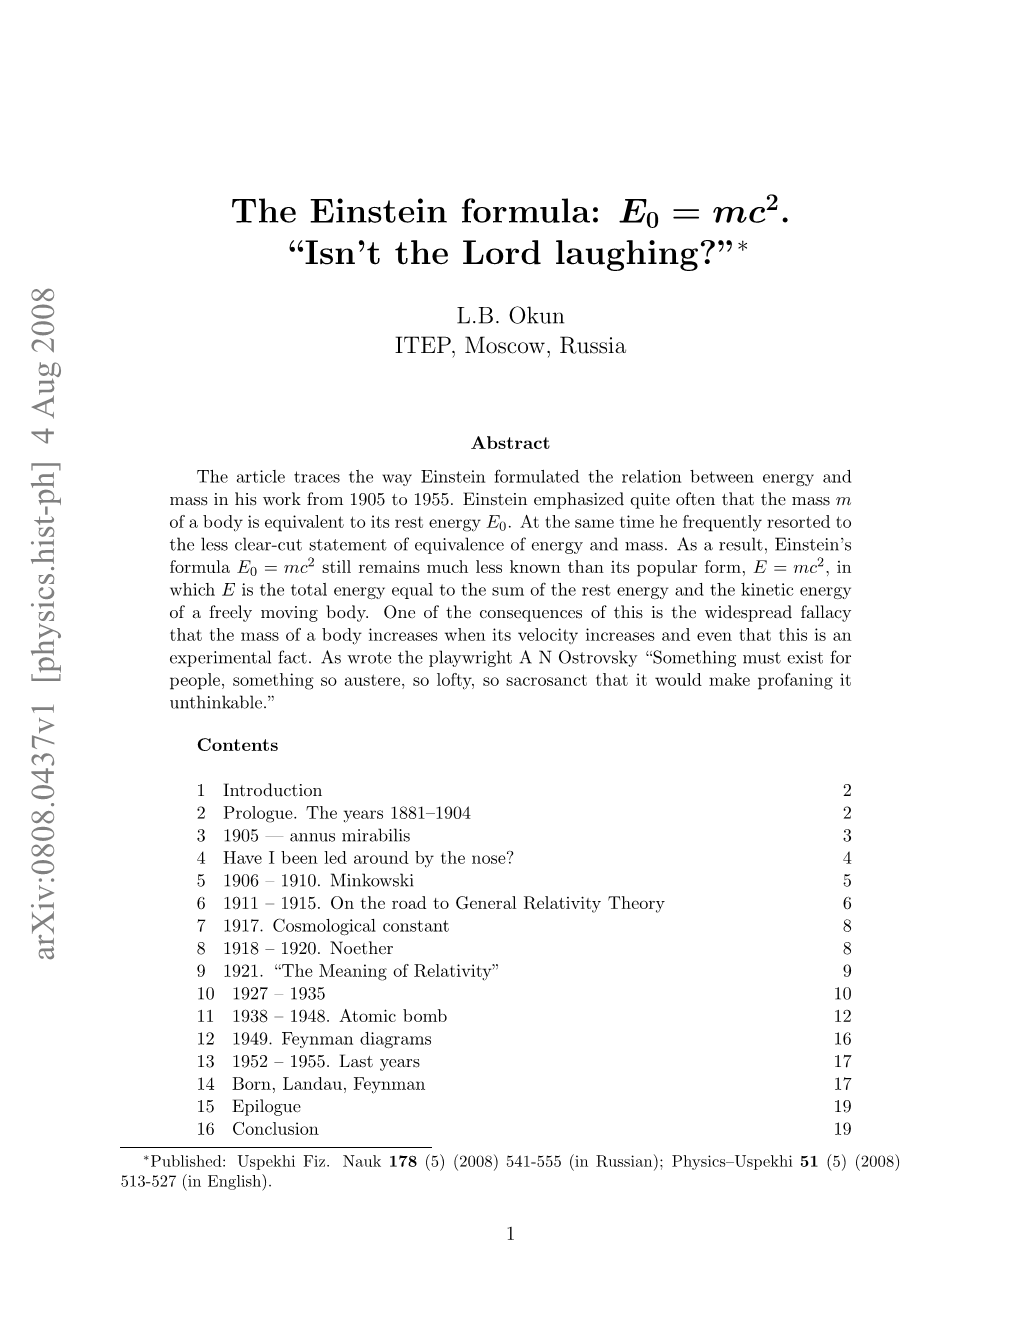 The Einstein Formula: E 0= Mc^ 2" Isn't the Lord Laughing?"